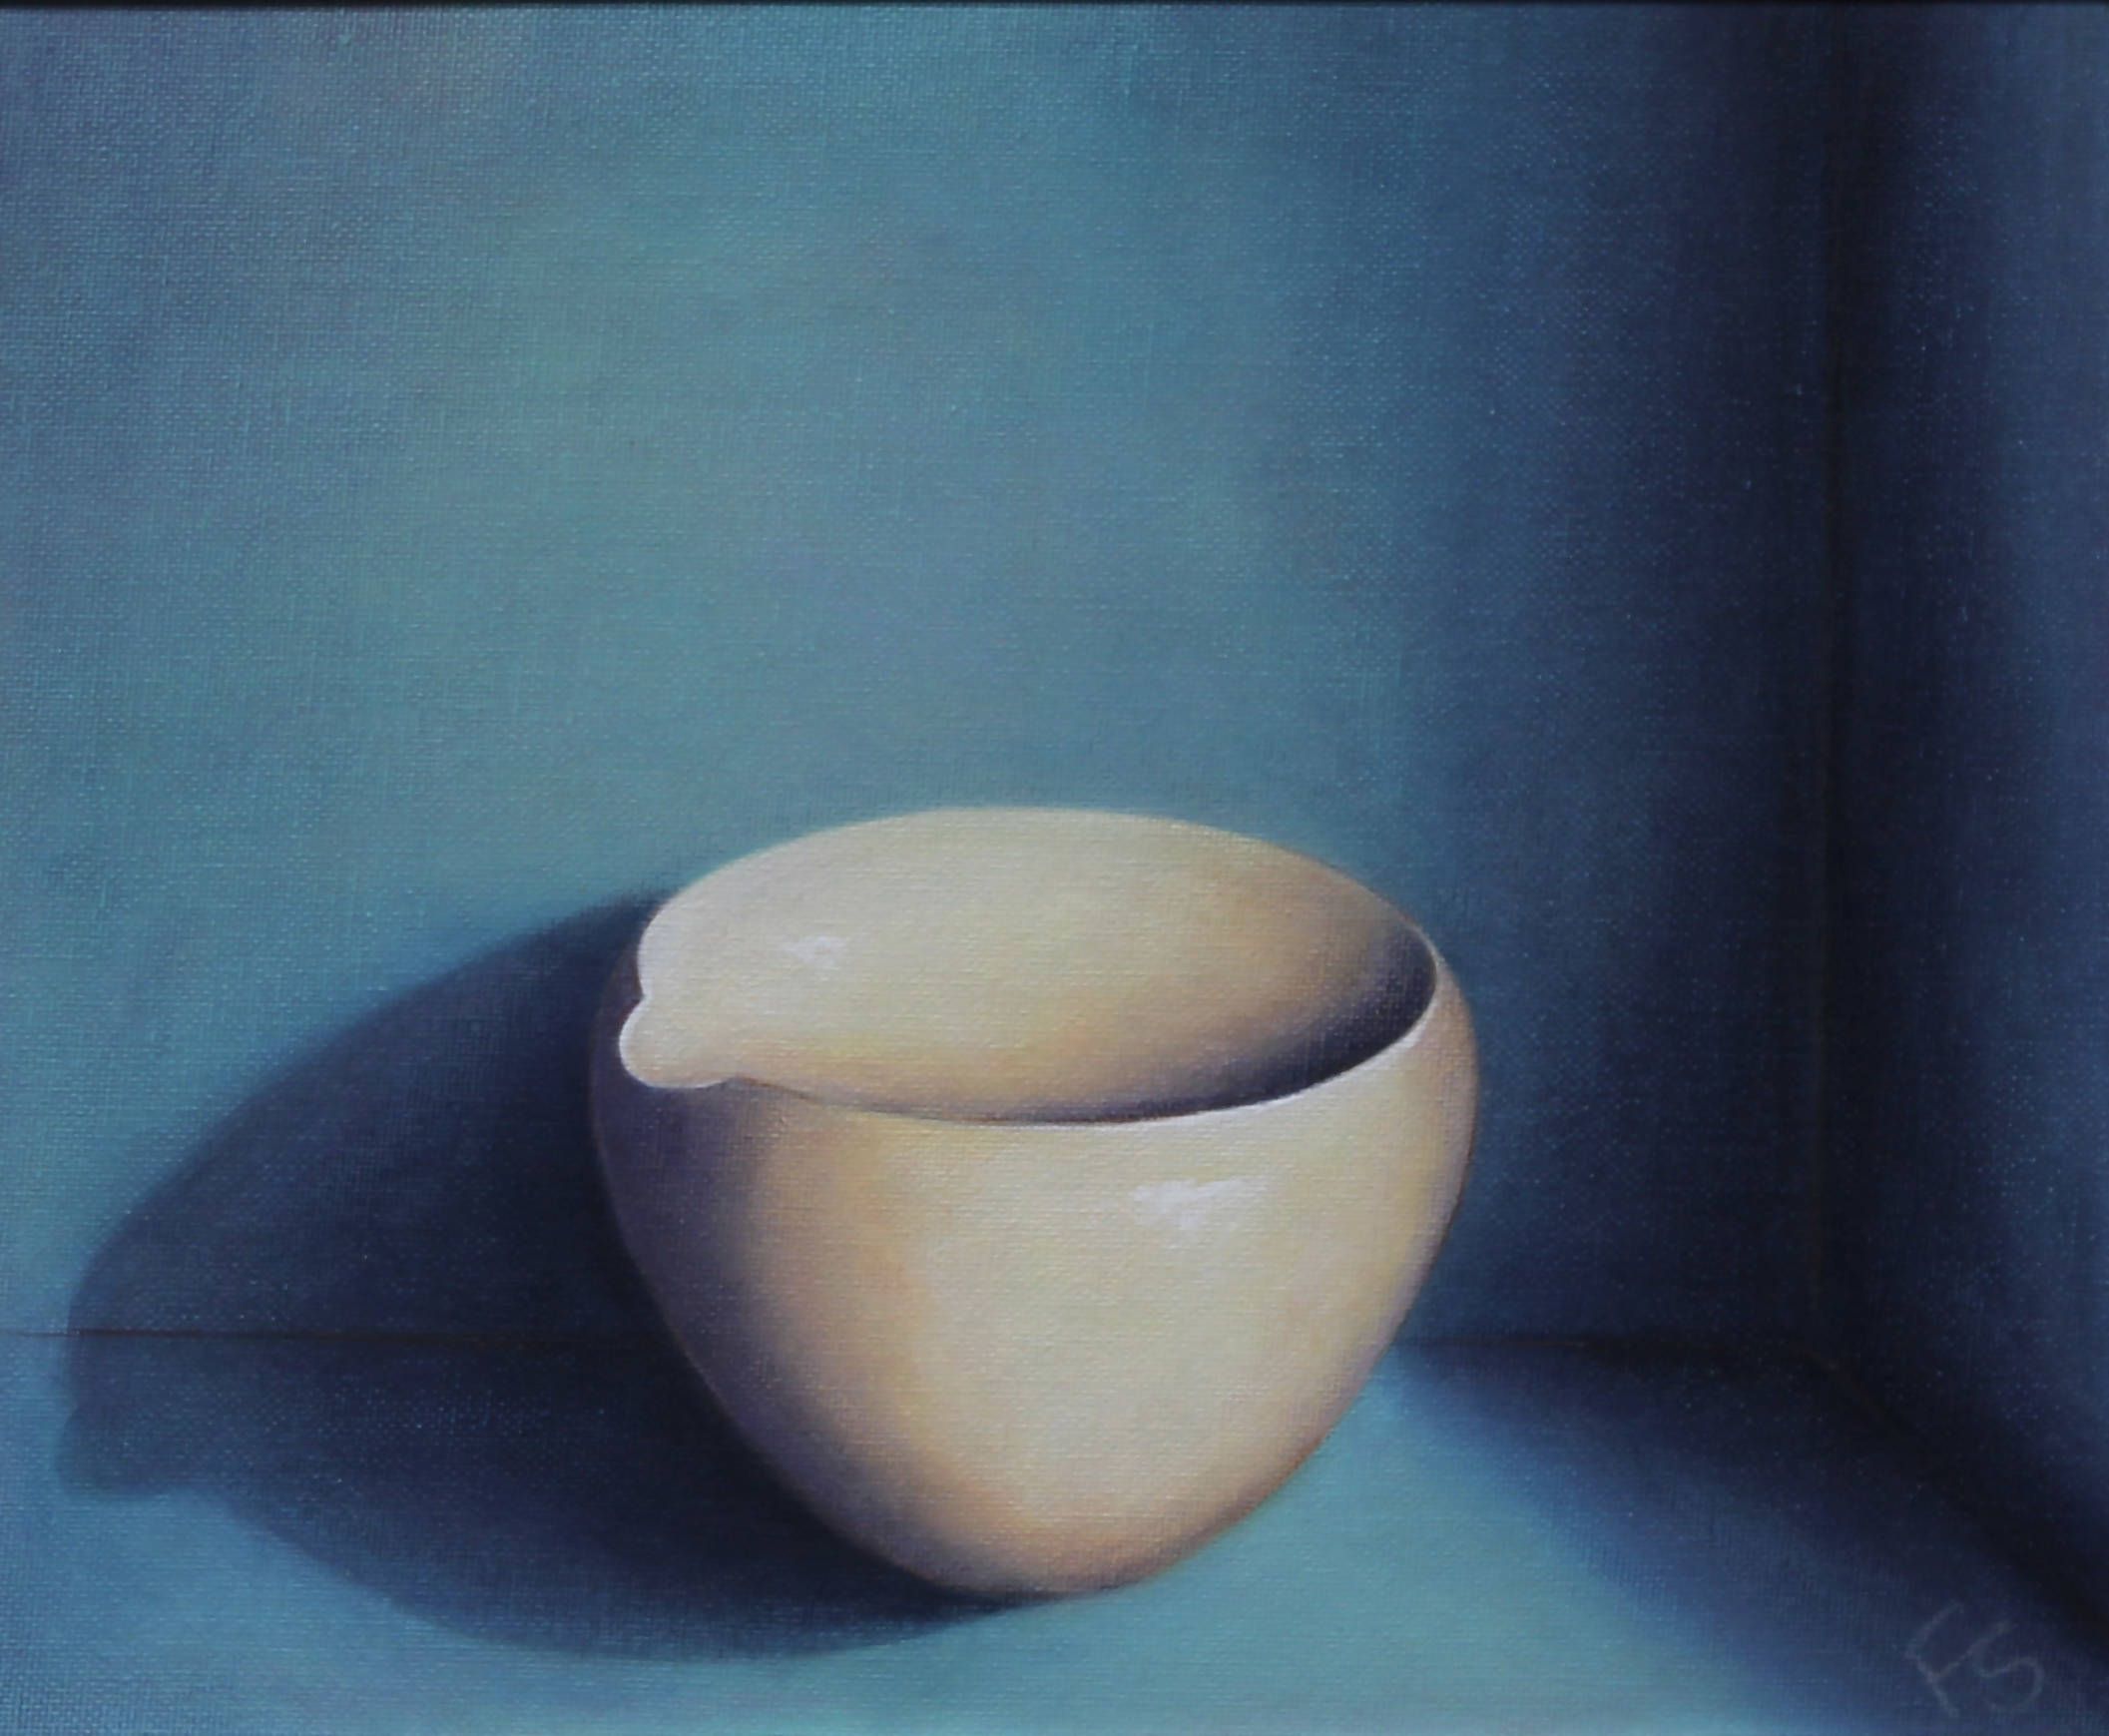 Fiona Smith "Pouring Bowl 2" by Fiona Smith